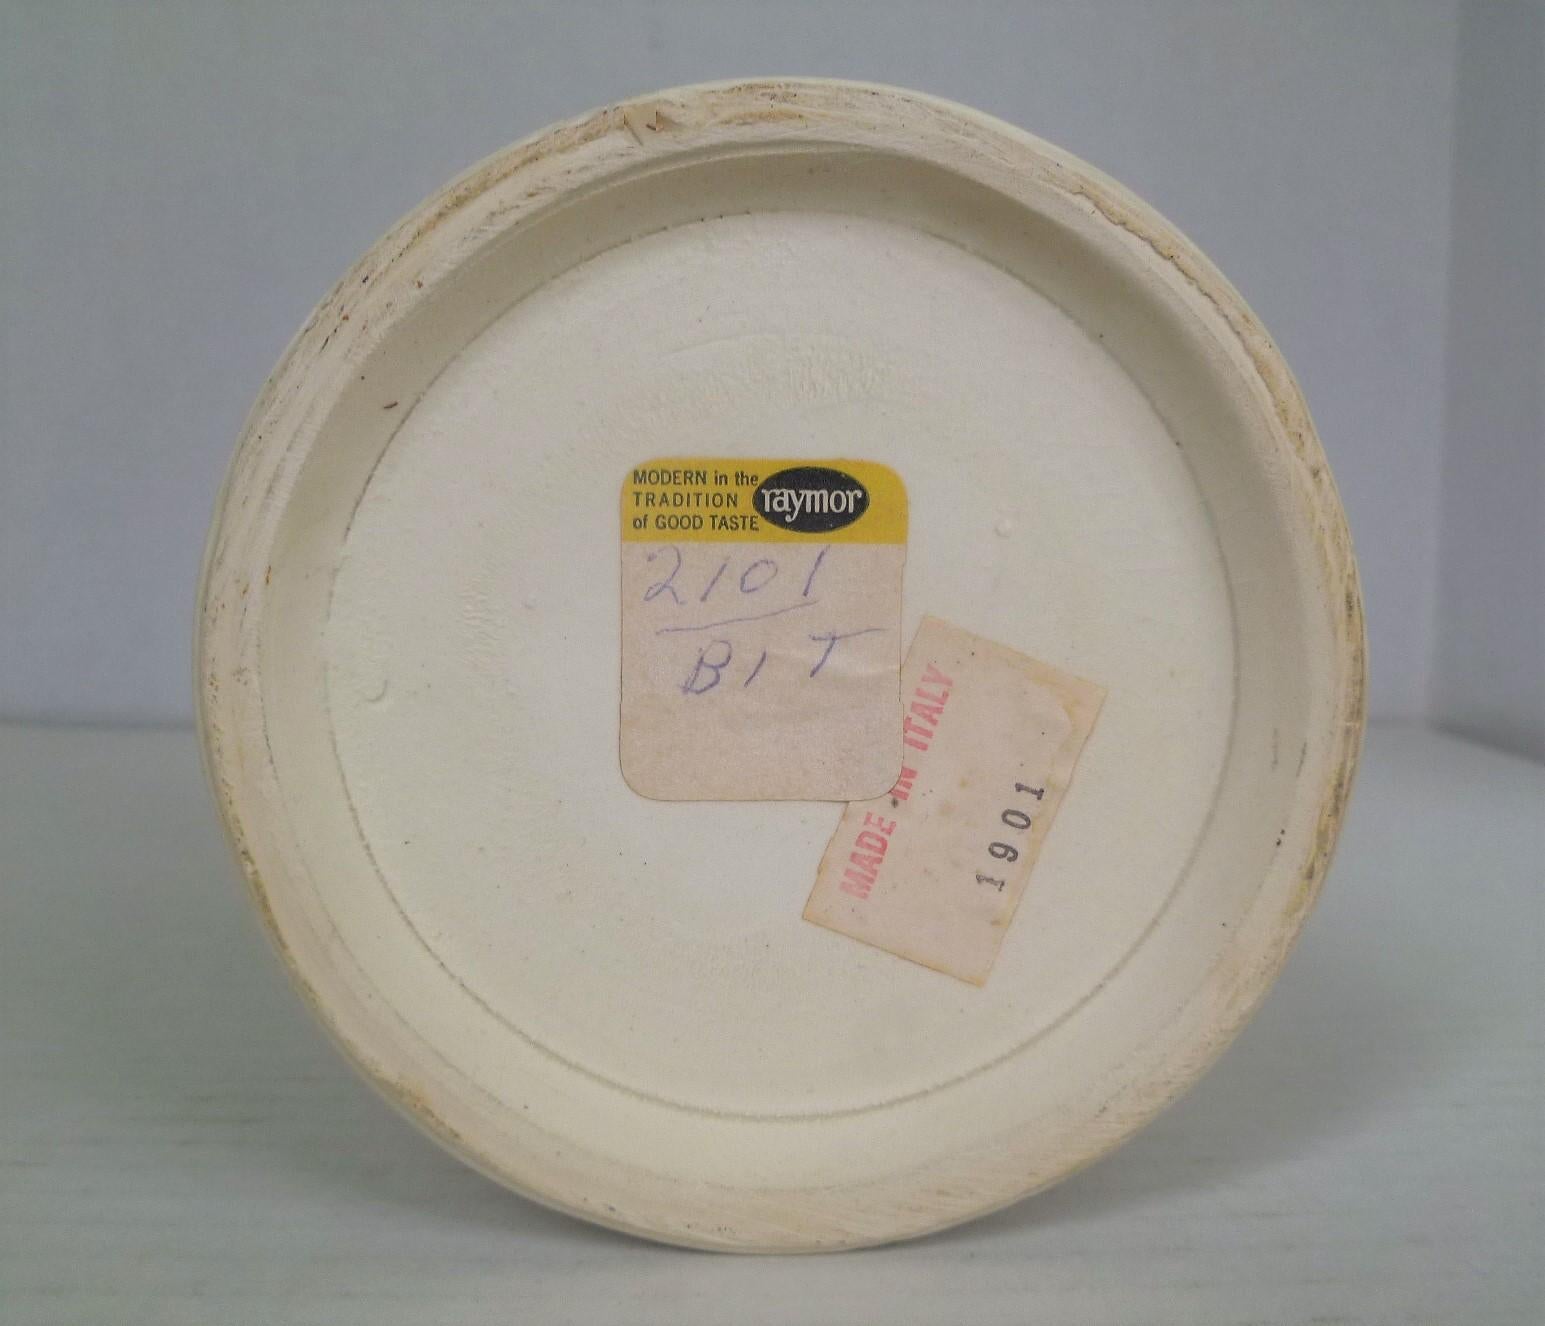 Glazed Organic Modern Raymor Bitossi Textured Londi Attributed Pottery Vase 1960s Italy